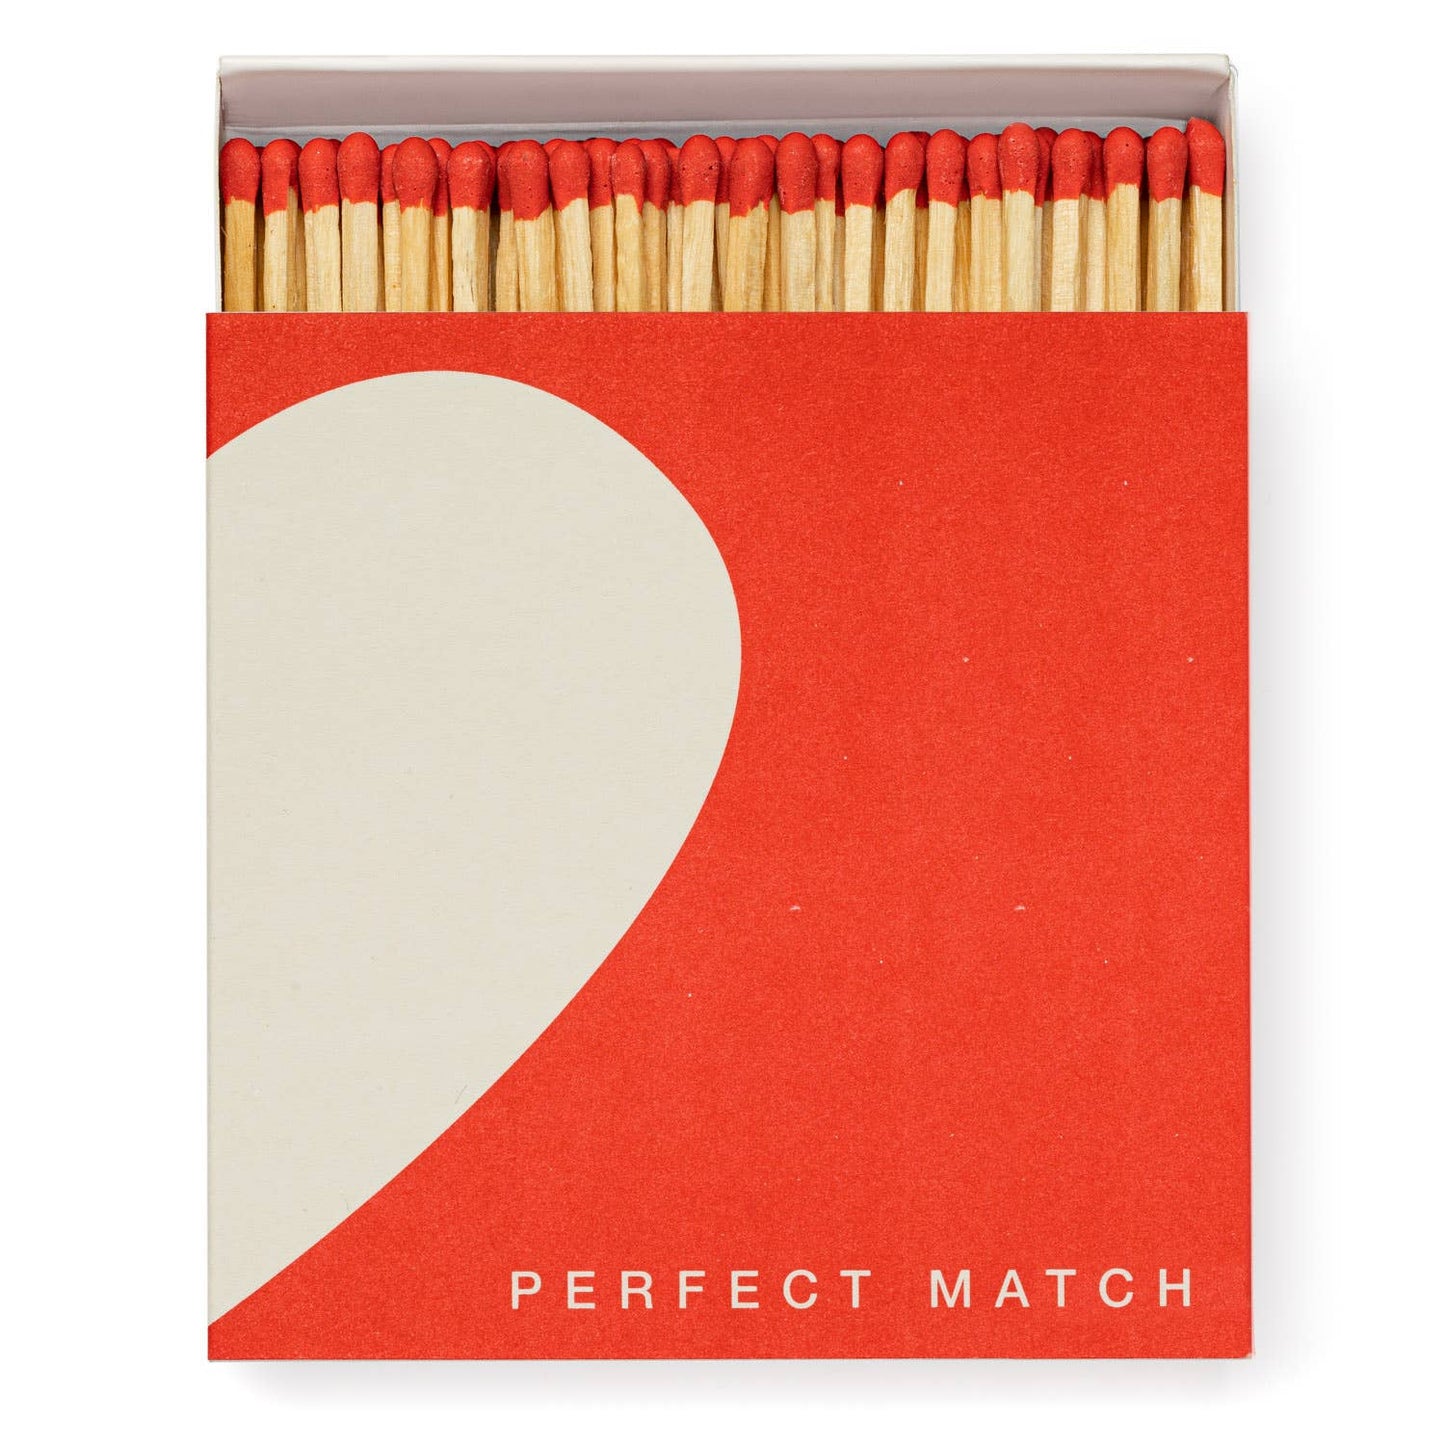 Perfect Match Square Matchbox  Archivist Gallery   